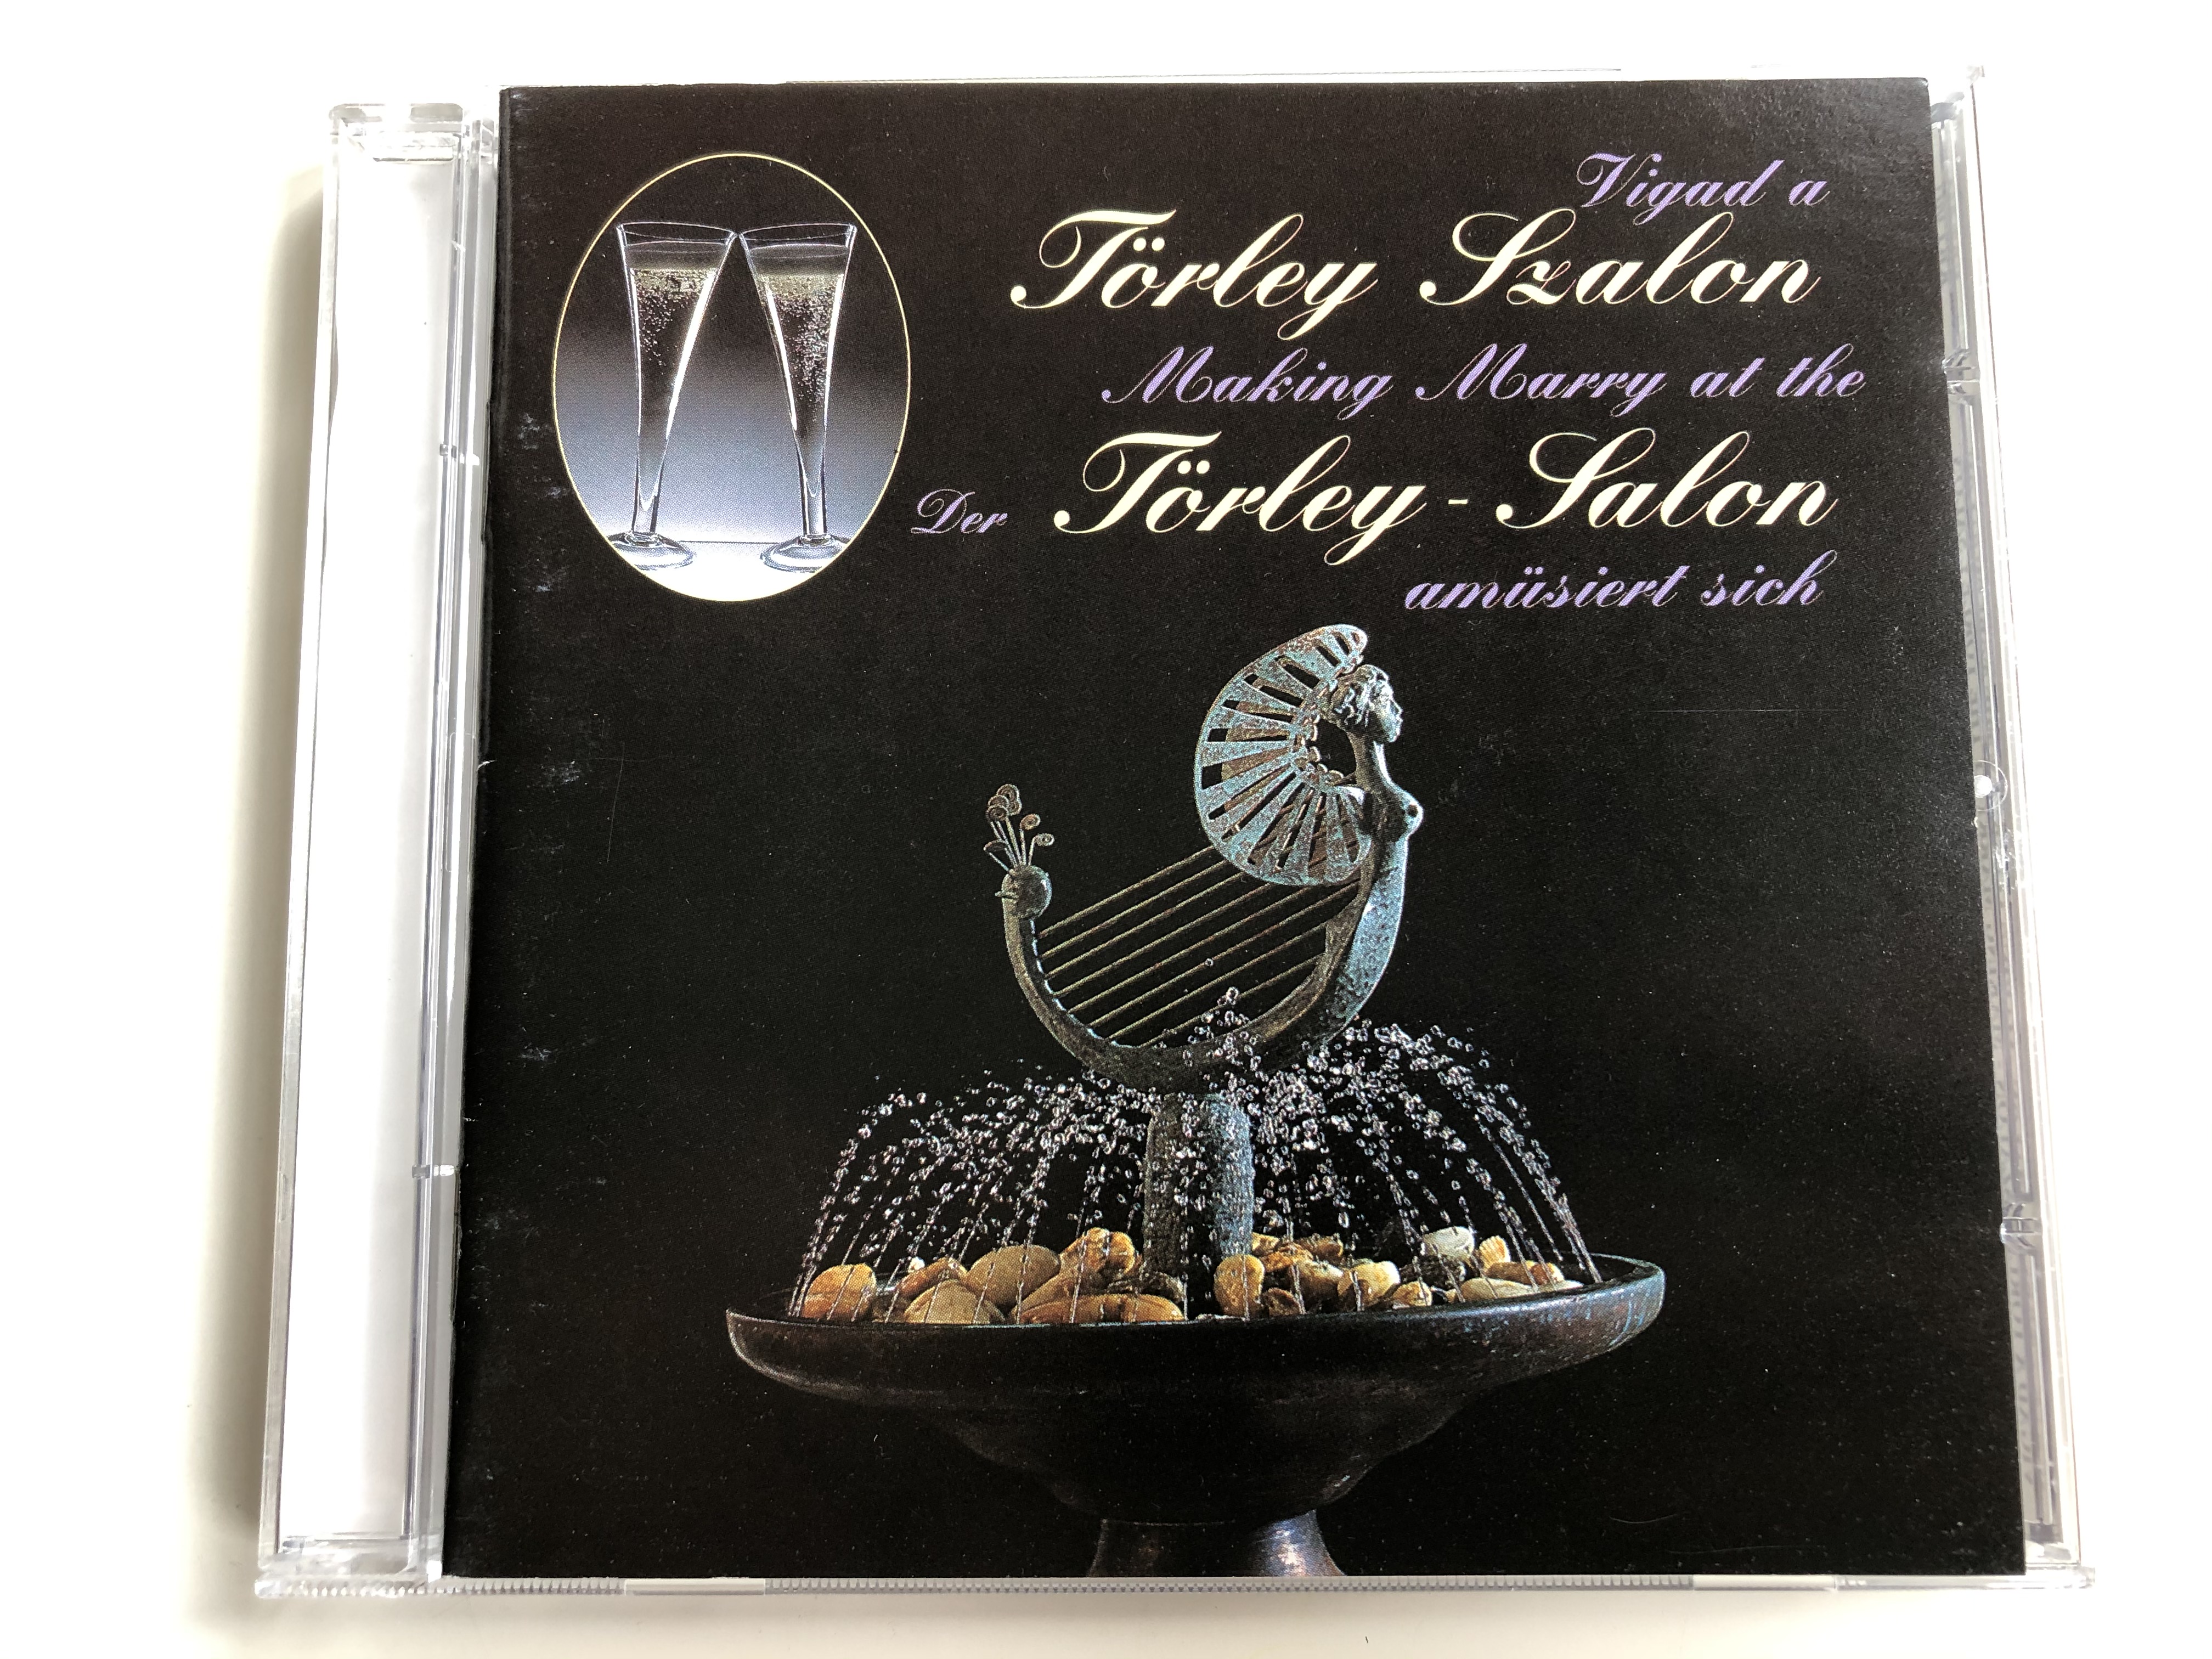 vigad-a-torley-szalon-making-marry-at-the-der-torley-szalon-amusiert-sich-katedralis-muveszeti-bt.-audio-cd-1998-stereo-kbt-001-1-.jpg